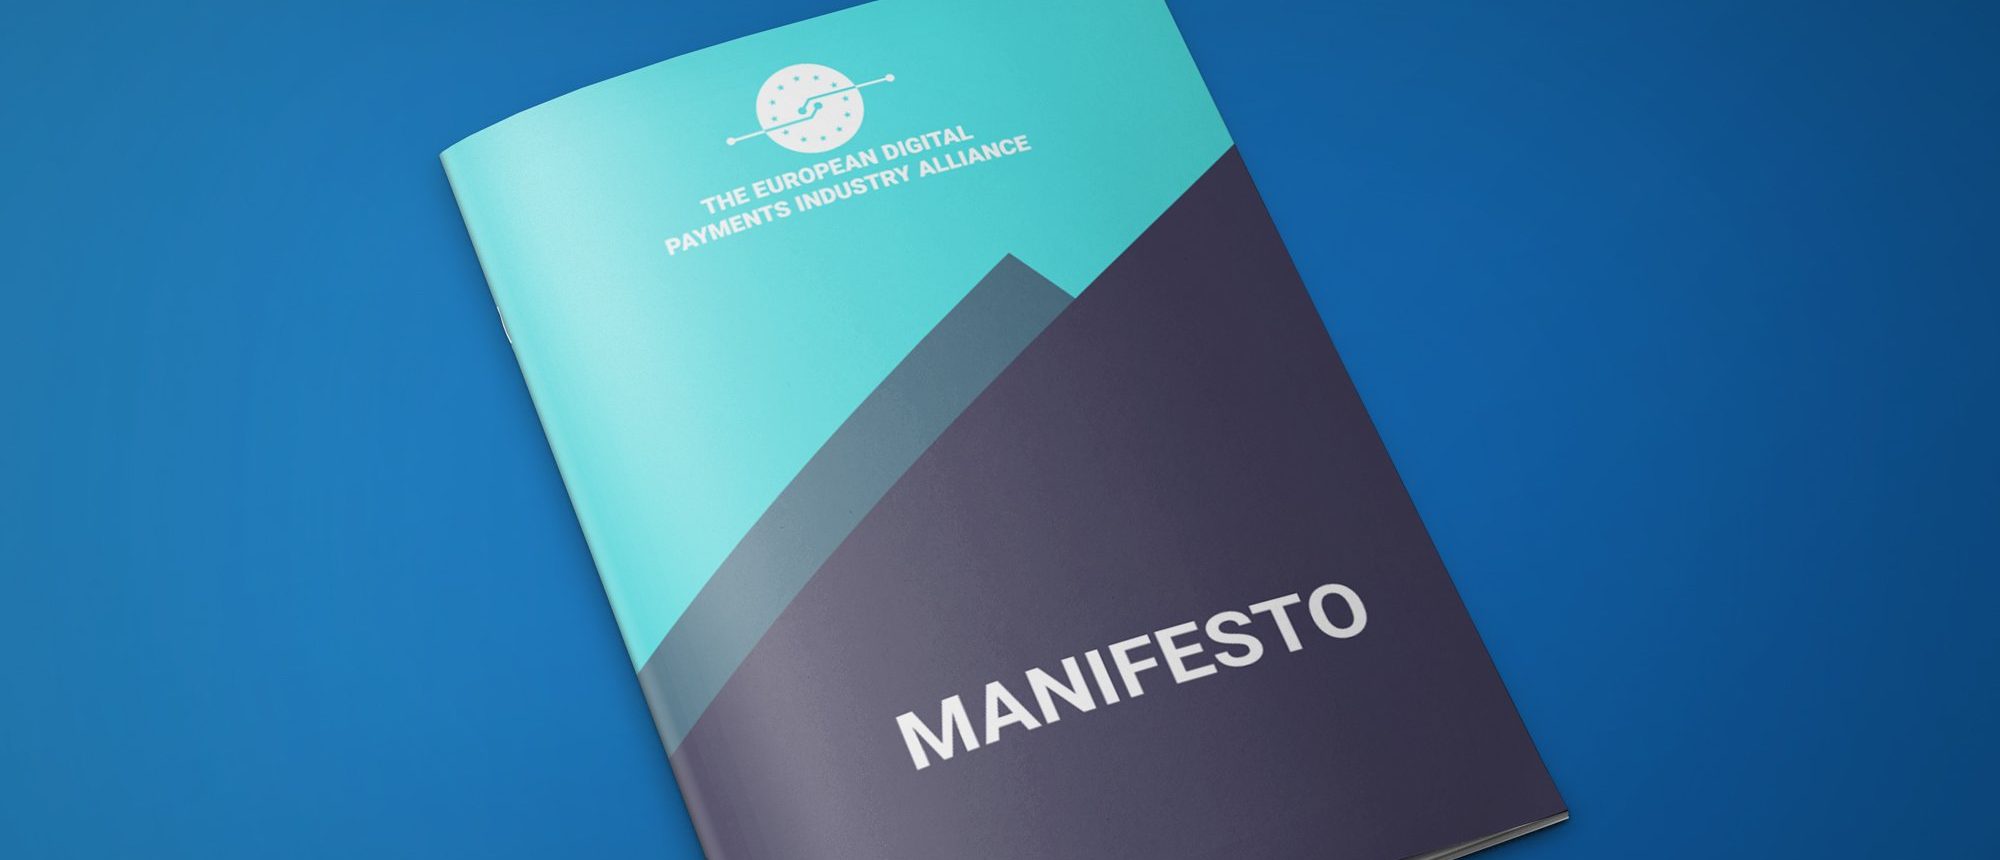 EDPIA Manifesto